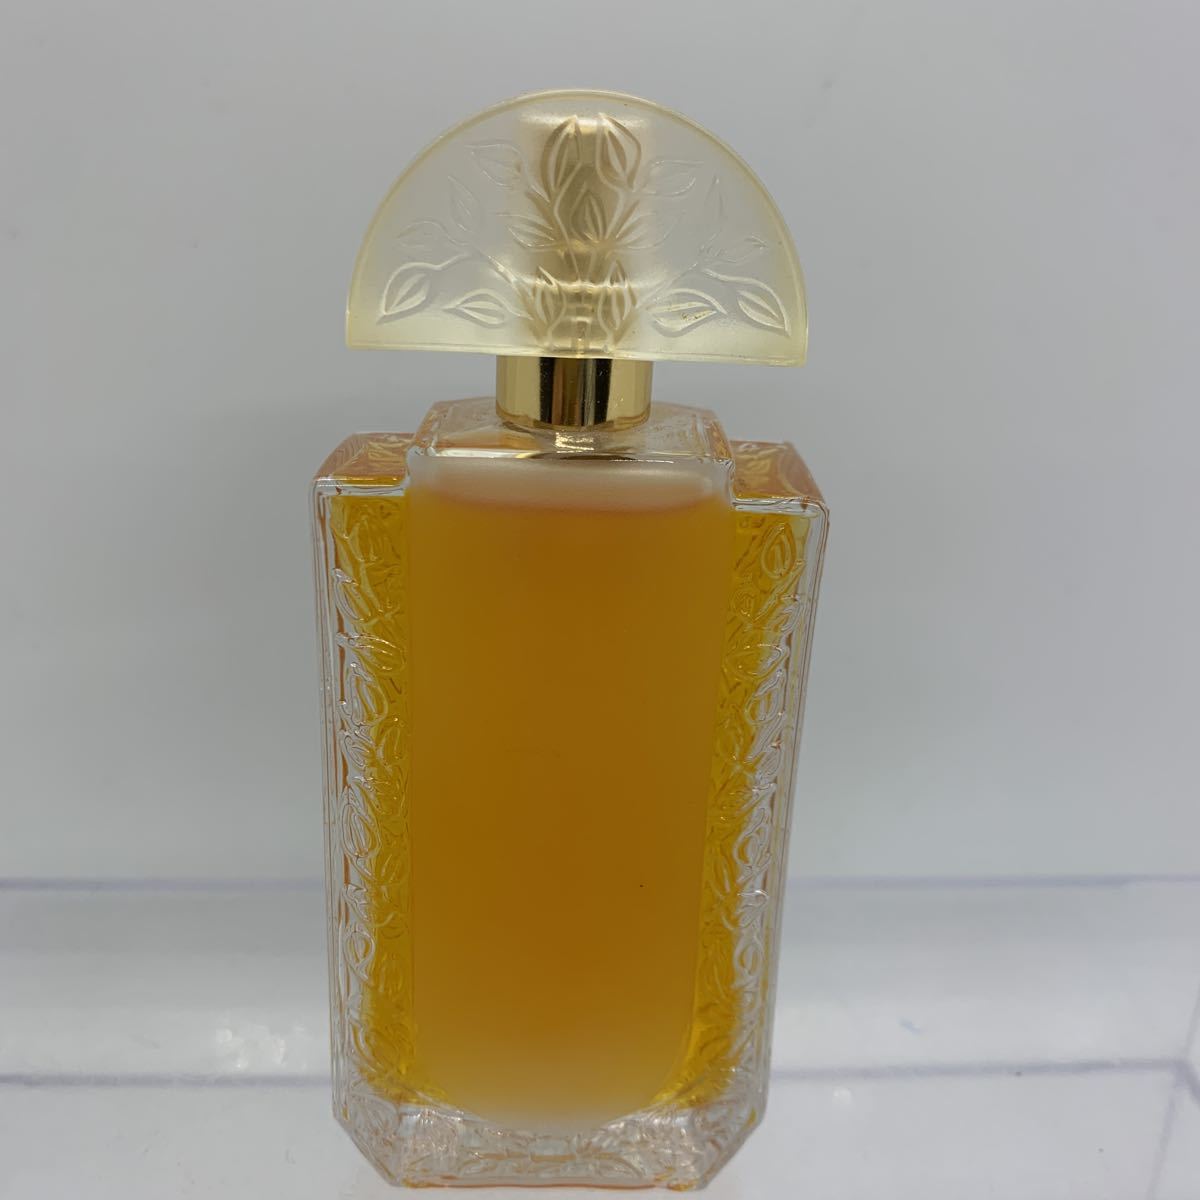  perfume LALIQUE 50ml 2103A158